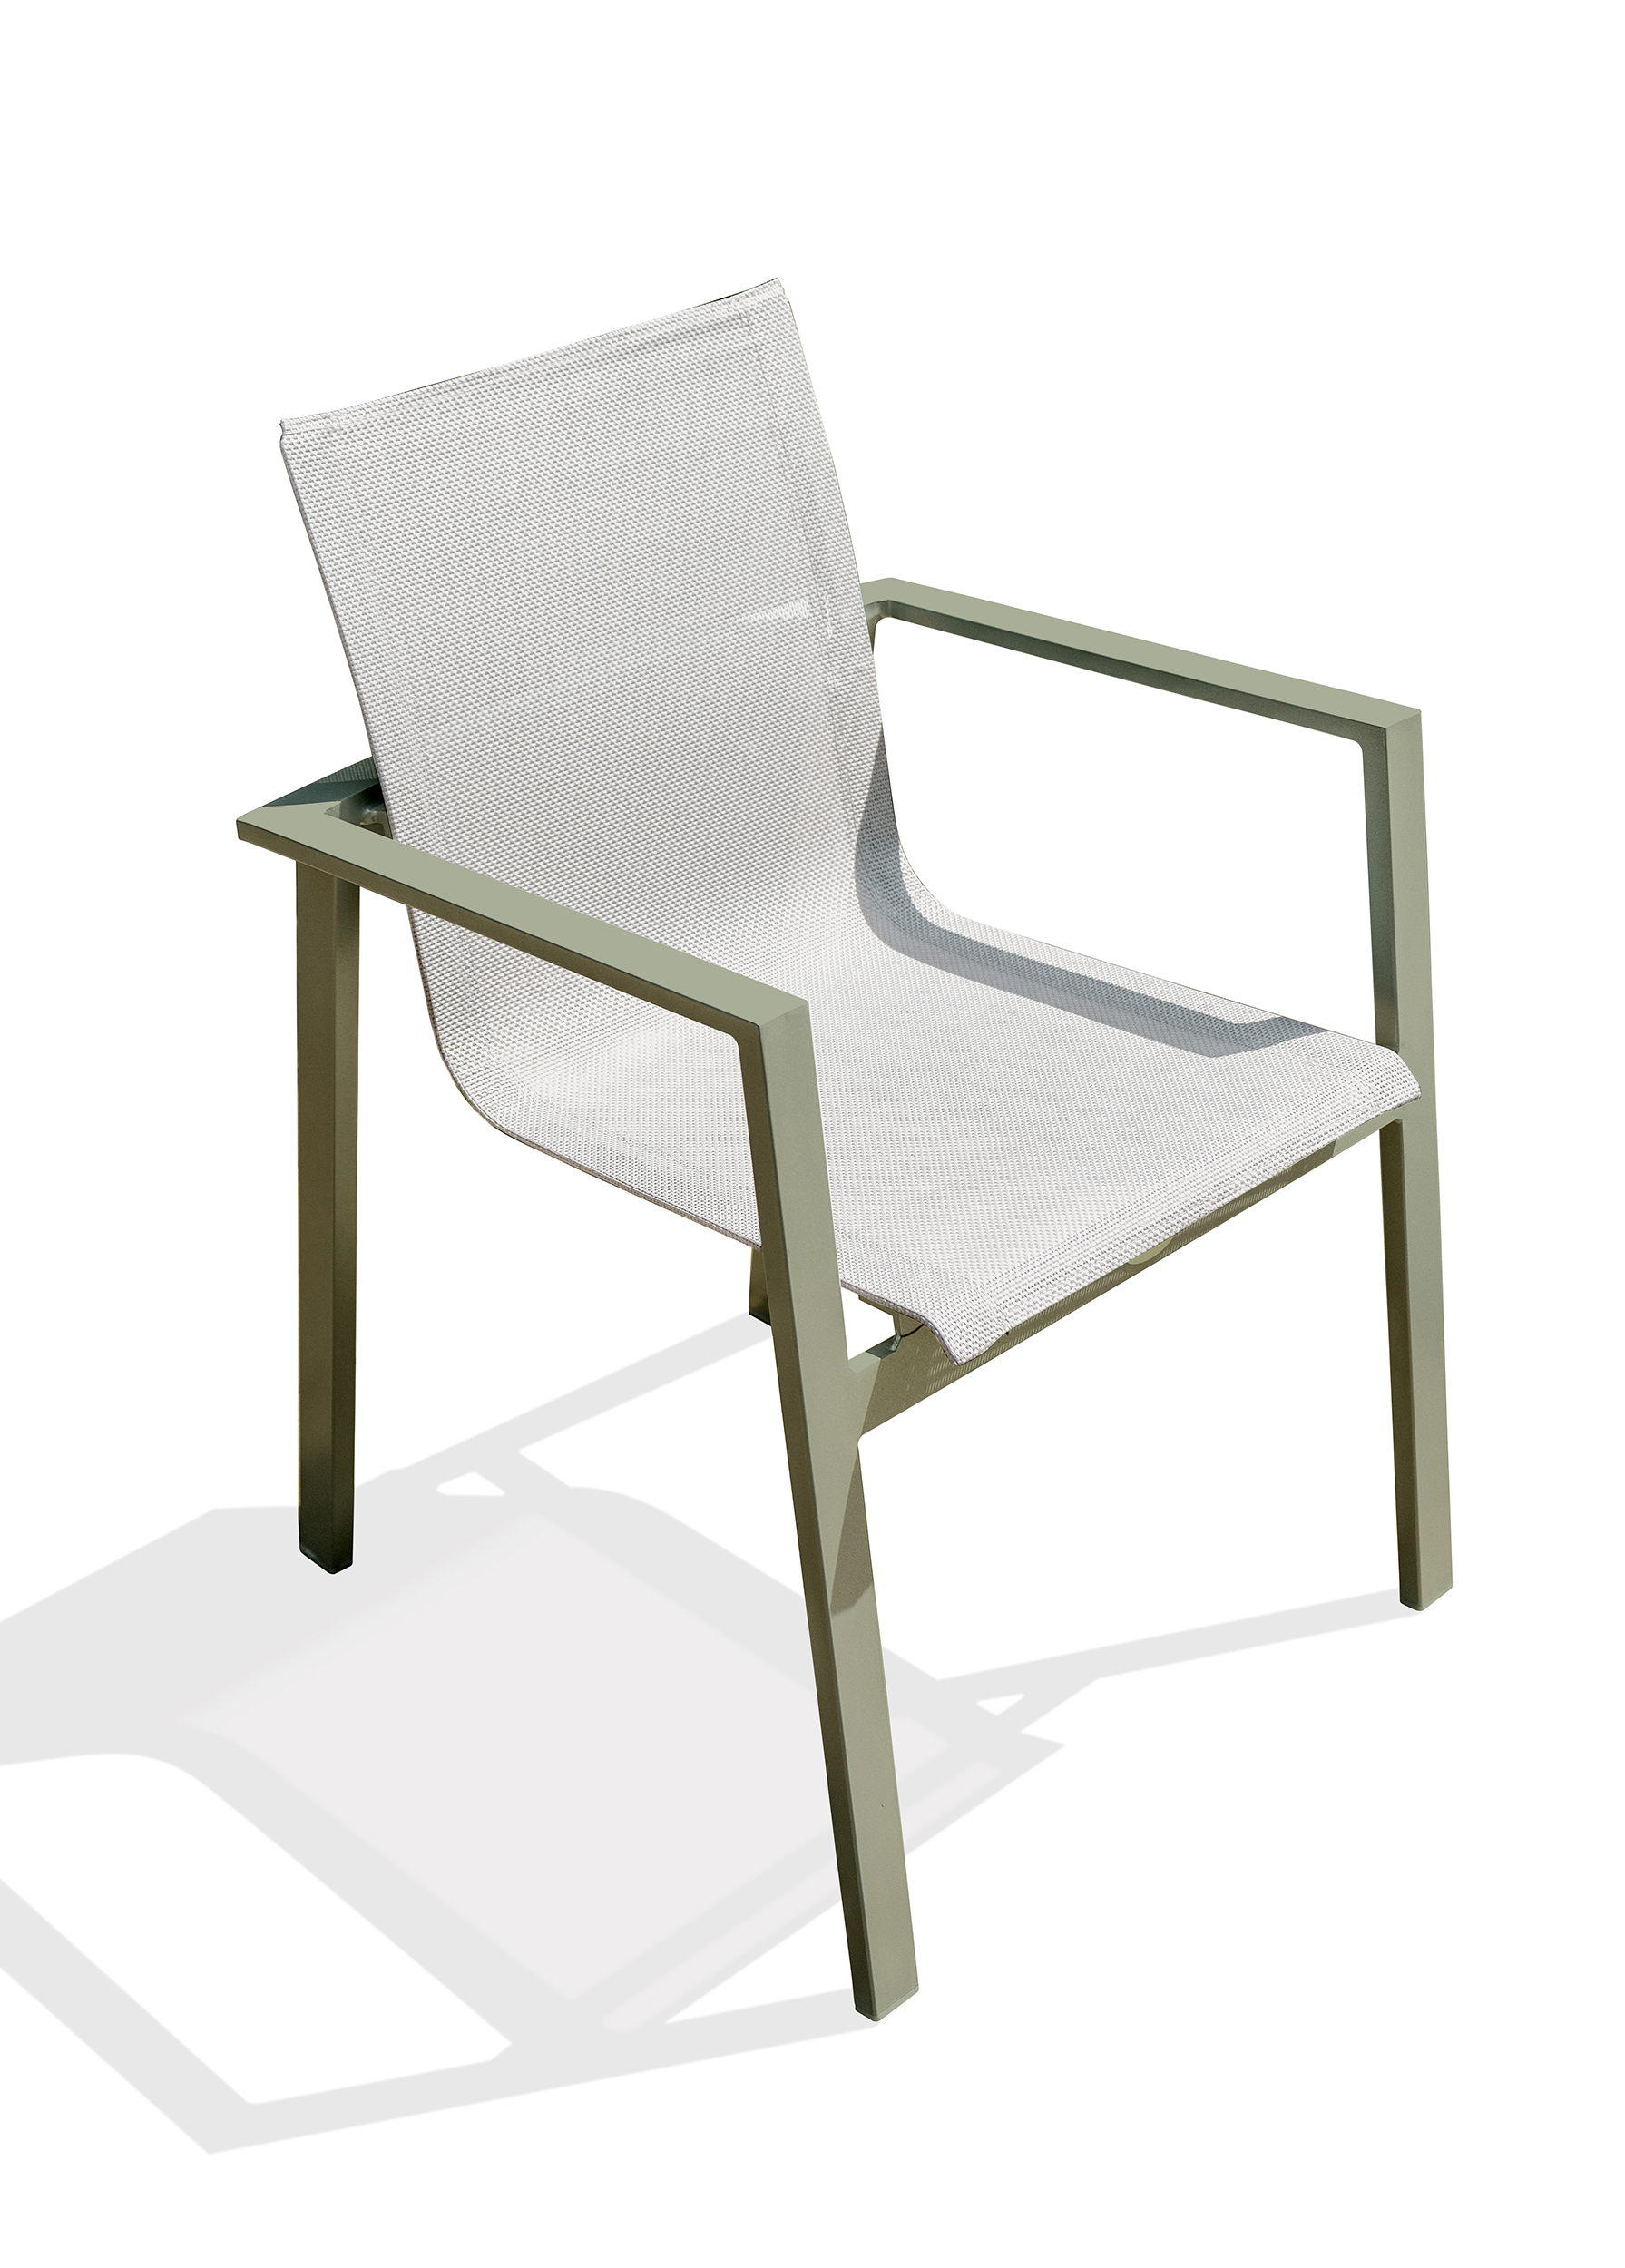 fauteuil de jardin empilable en alu kaki et toile plastifiée grise